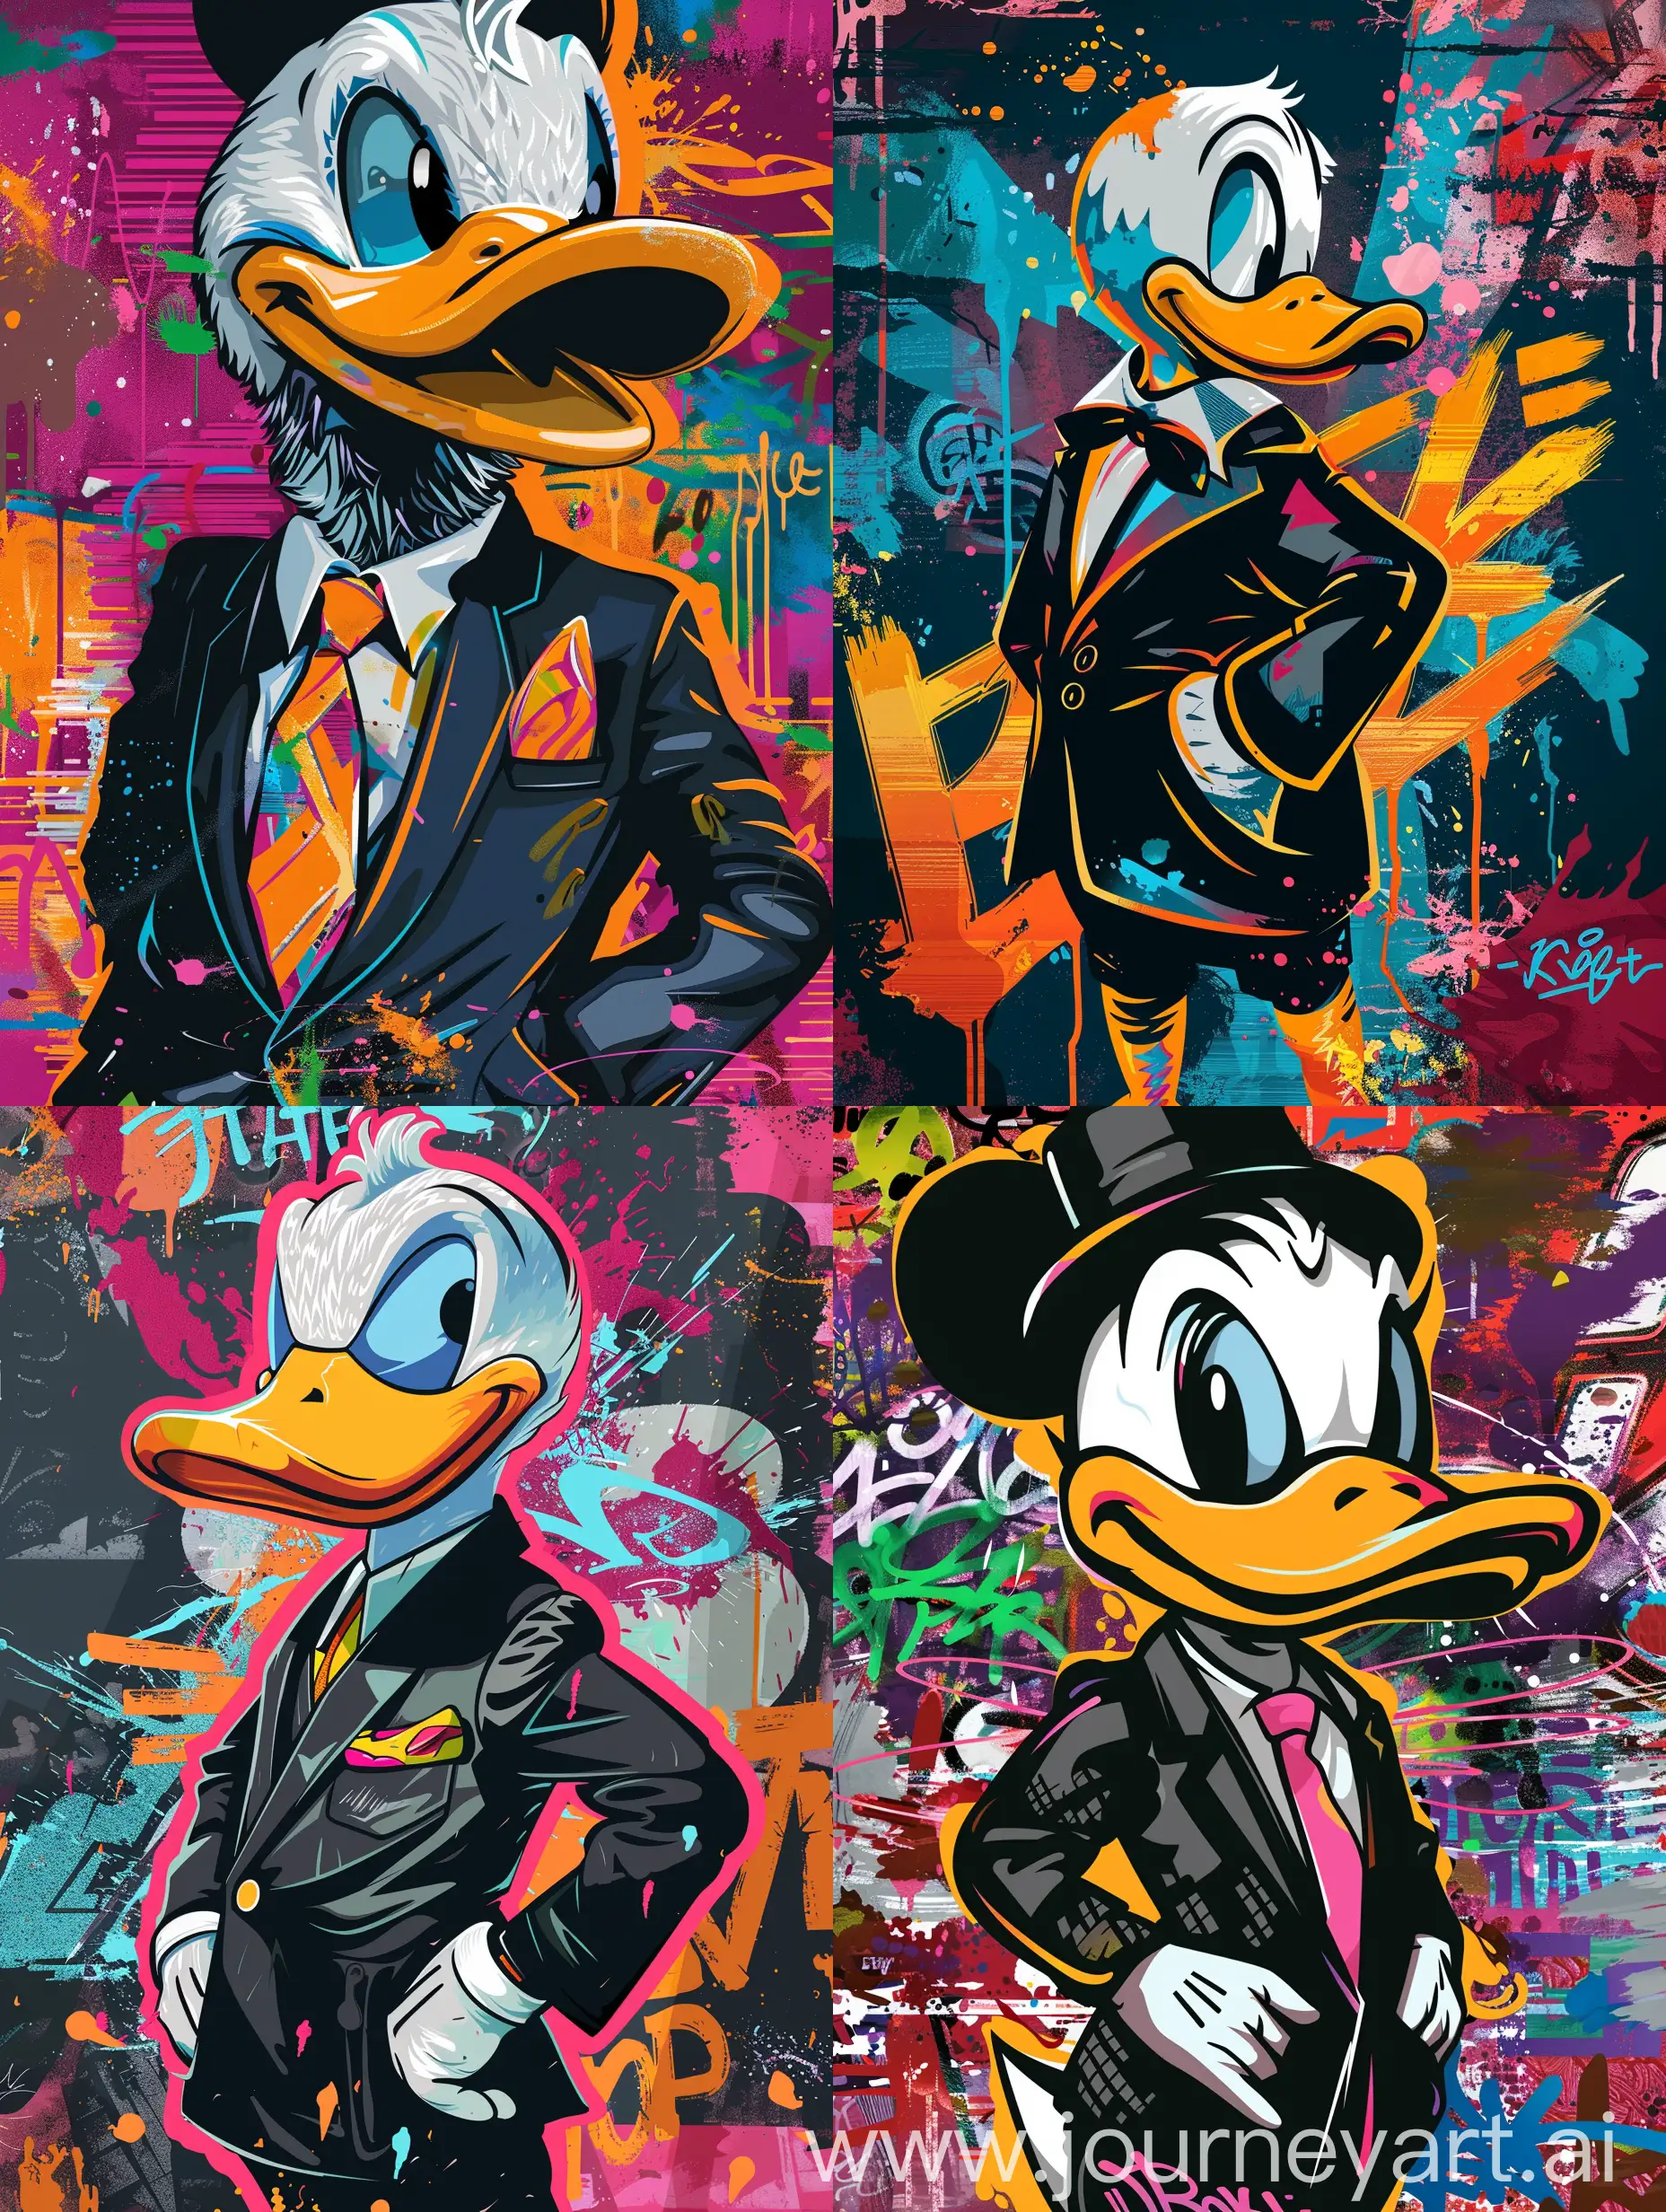 Steert urban style, flat vector illustration graffiti, close up of Donald Duck wearing a a black men suite, graffiti,vibrant, urban street art style, detailed, random graffiti Texts, paint splash and graffiti text